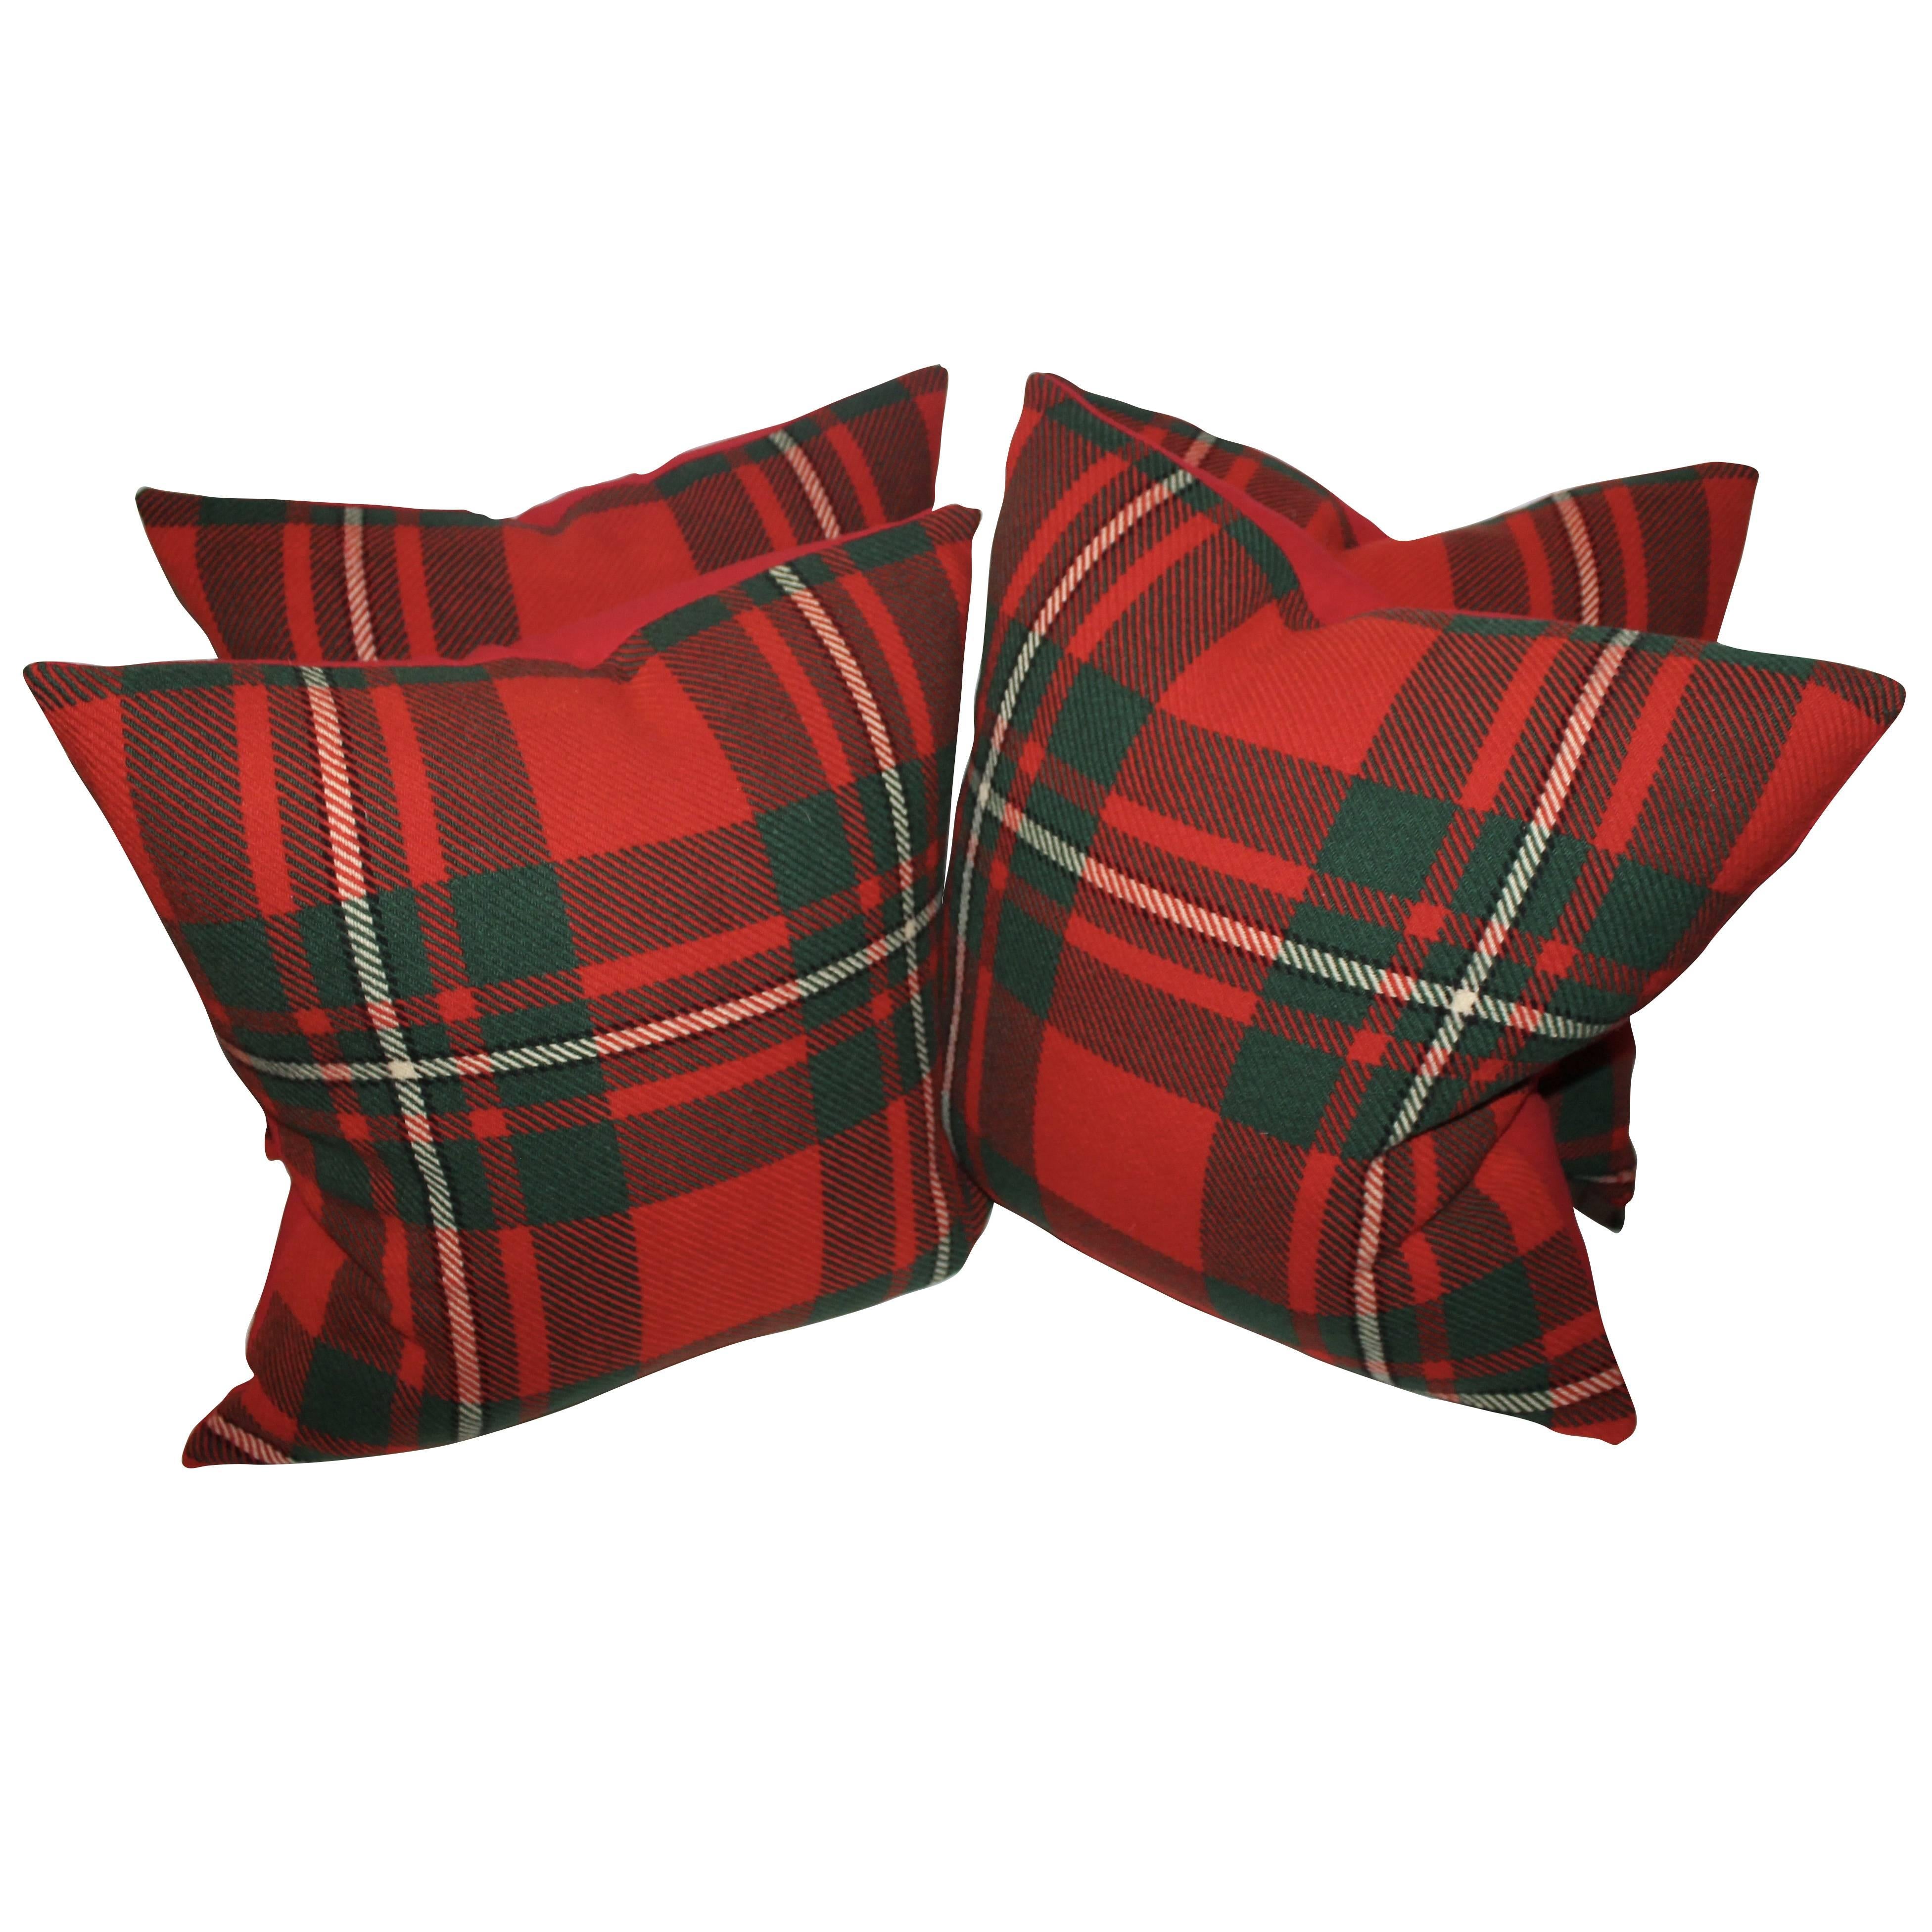 Pair of Plaid Wool Blanket Pillows